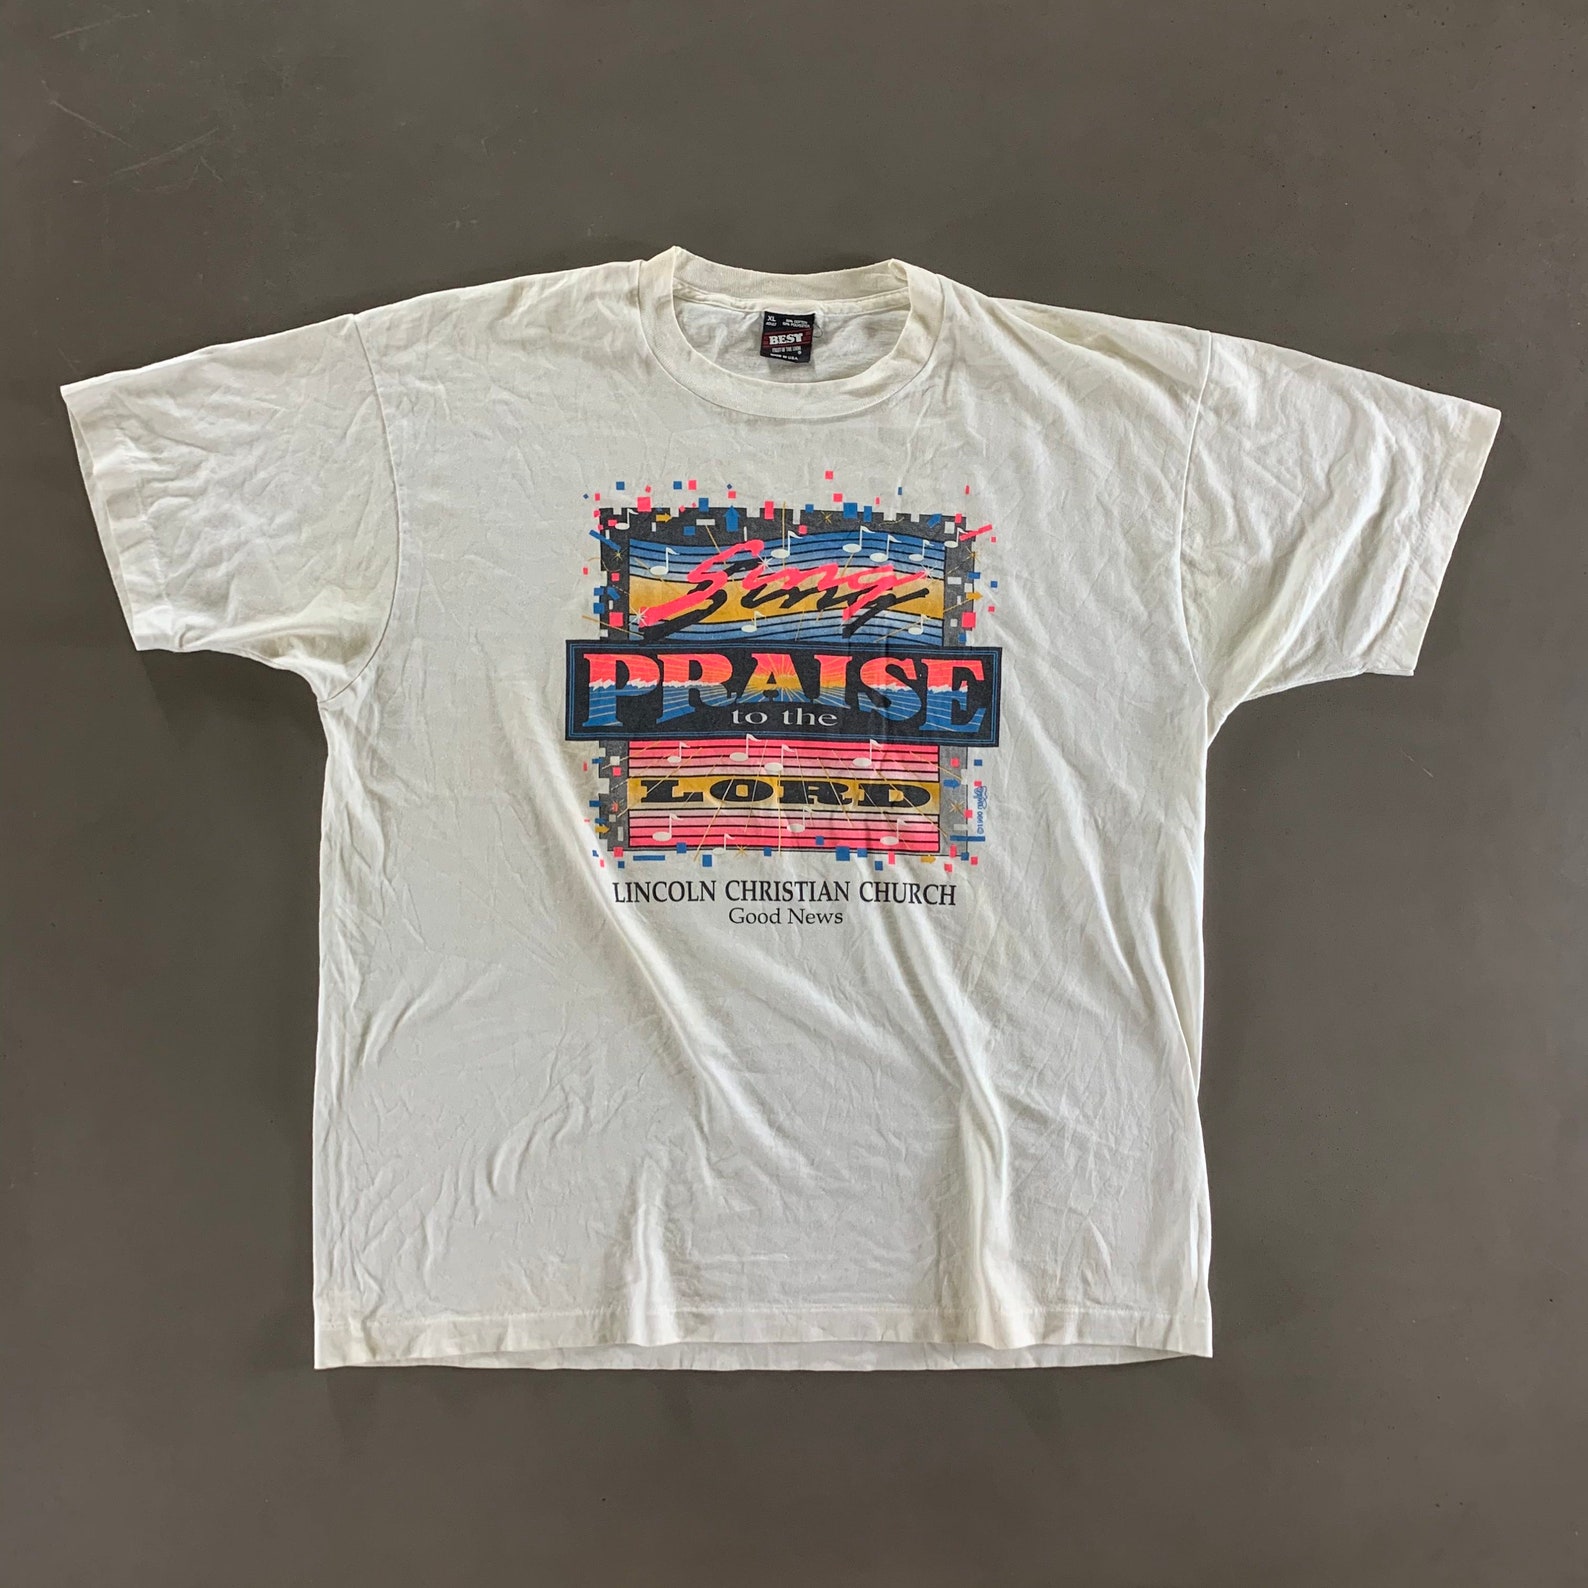 Vintage 1990s Christian T-shirt size XL | Etsy